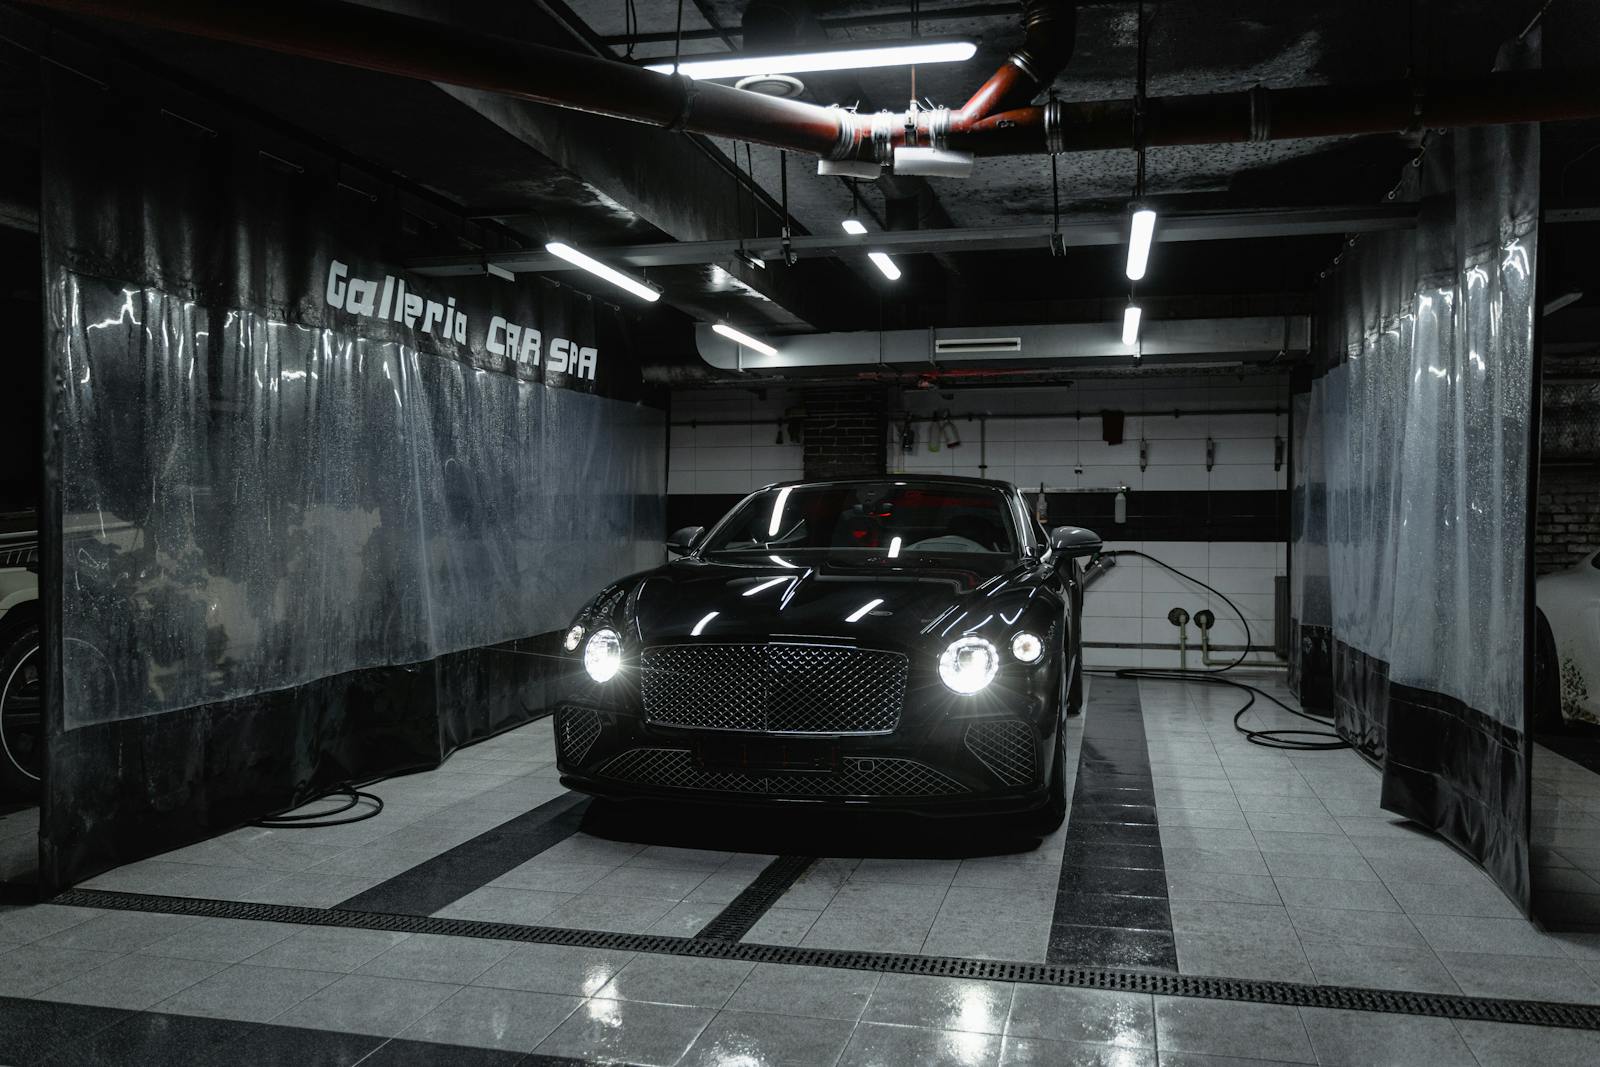 A Black Car Parked in the Carwash Garage